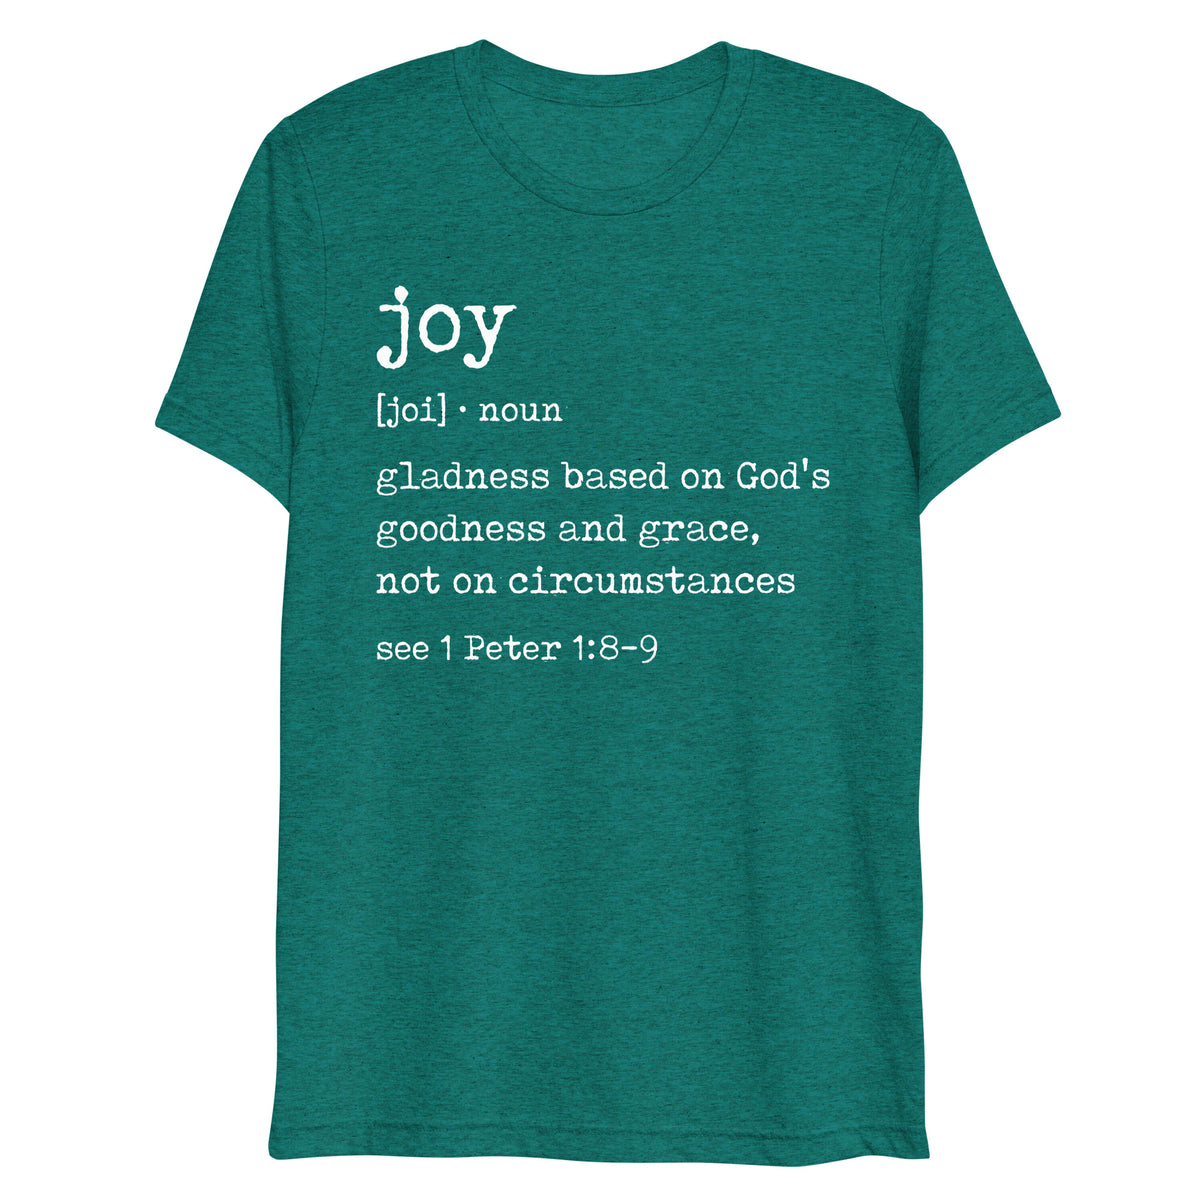 Joy Definition - Women's Tri-Blend T-Shirt